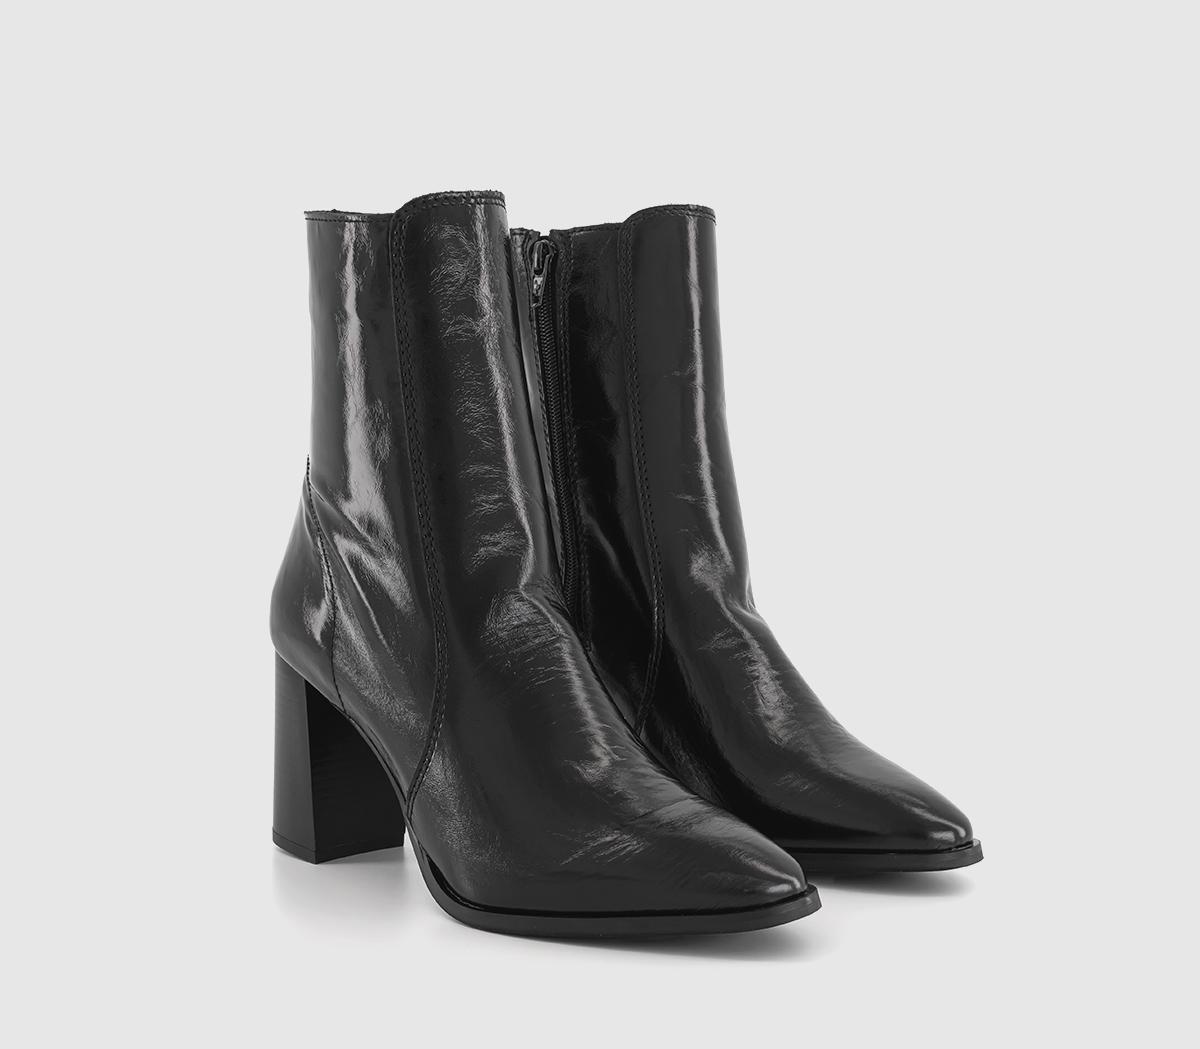 OFFICE Allegra Block Heel Cheslea Boots Black Patent Leather, 8